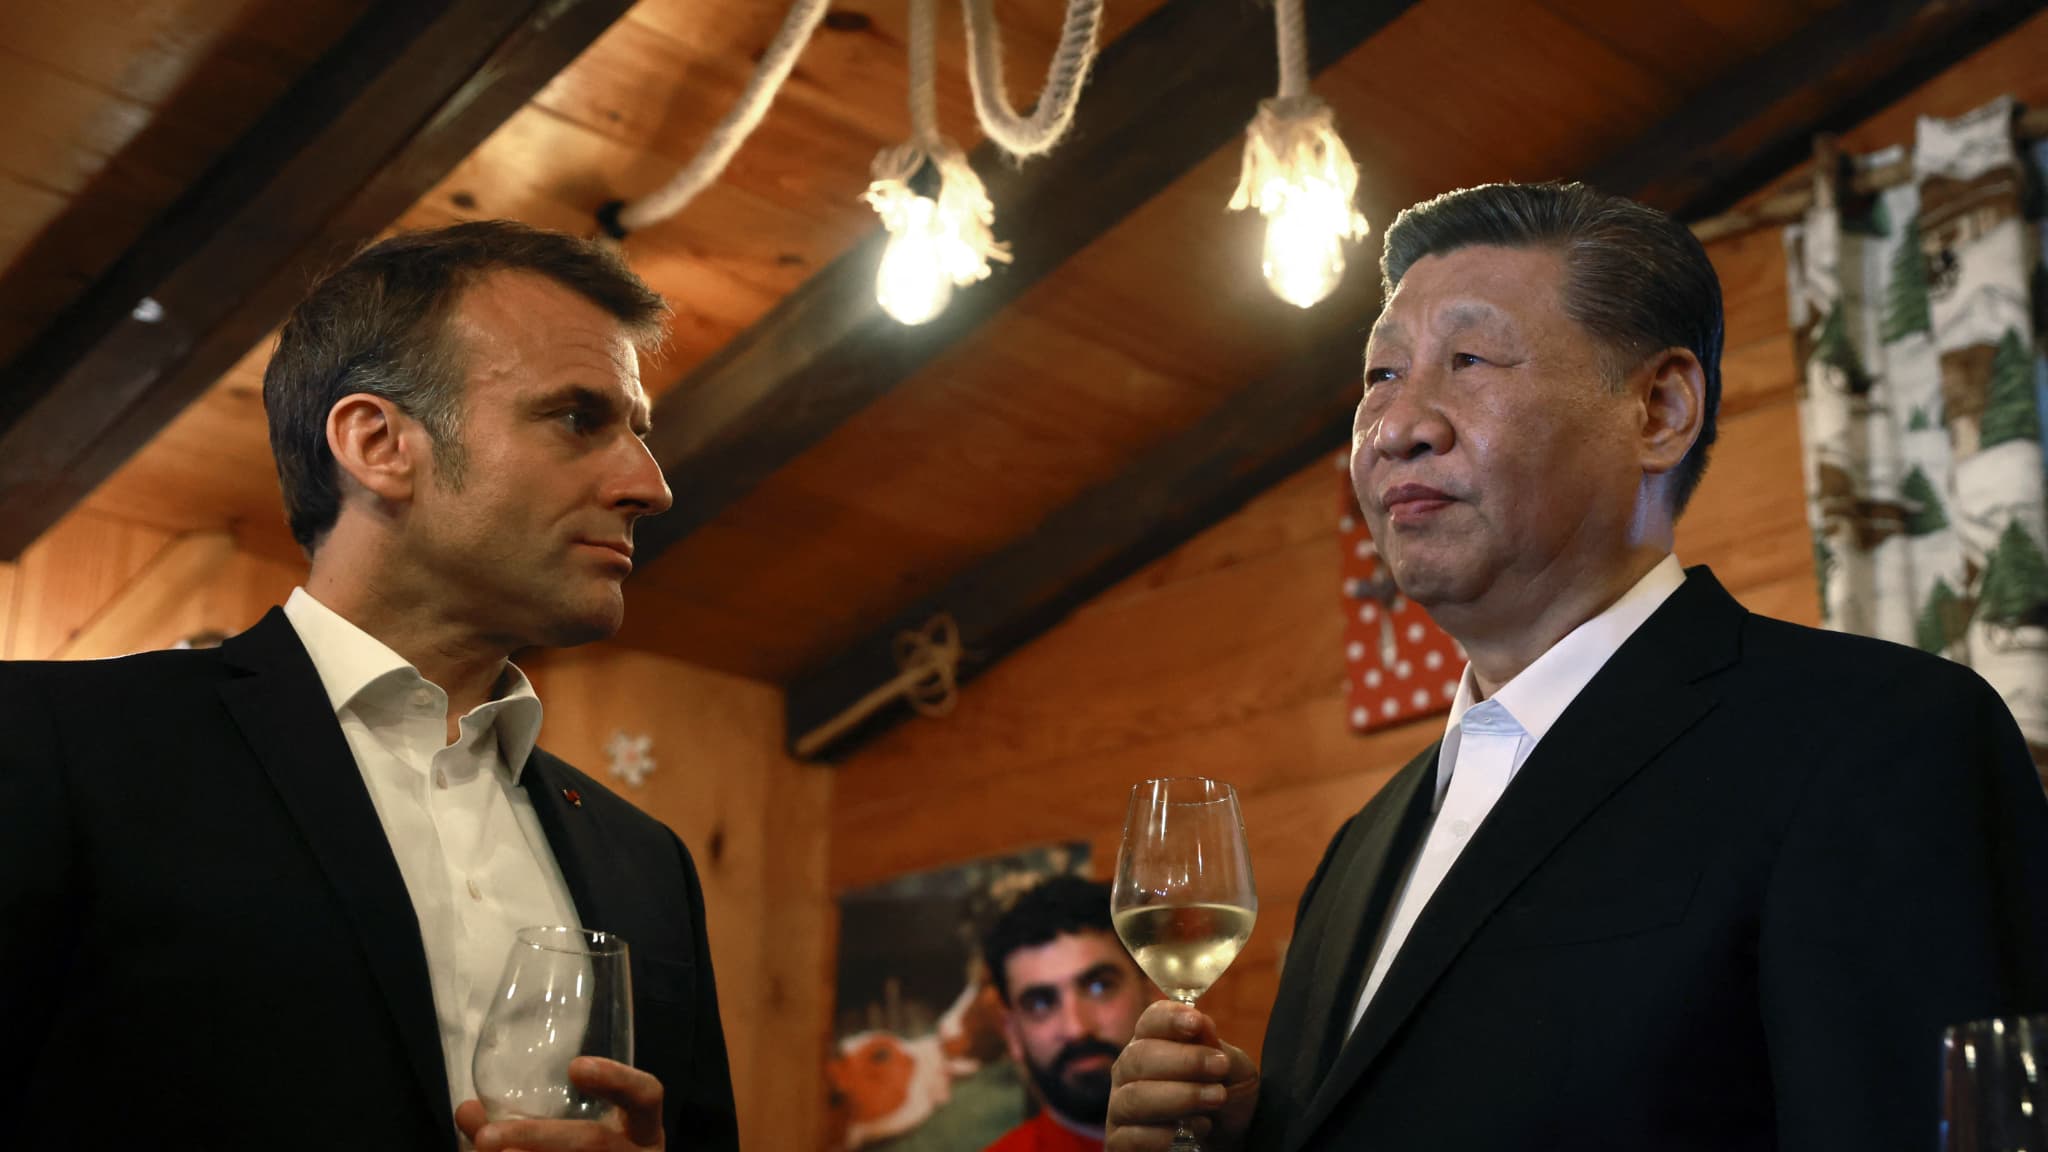 Emmanuel Macron looks back on Xi Jinping's visit to France